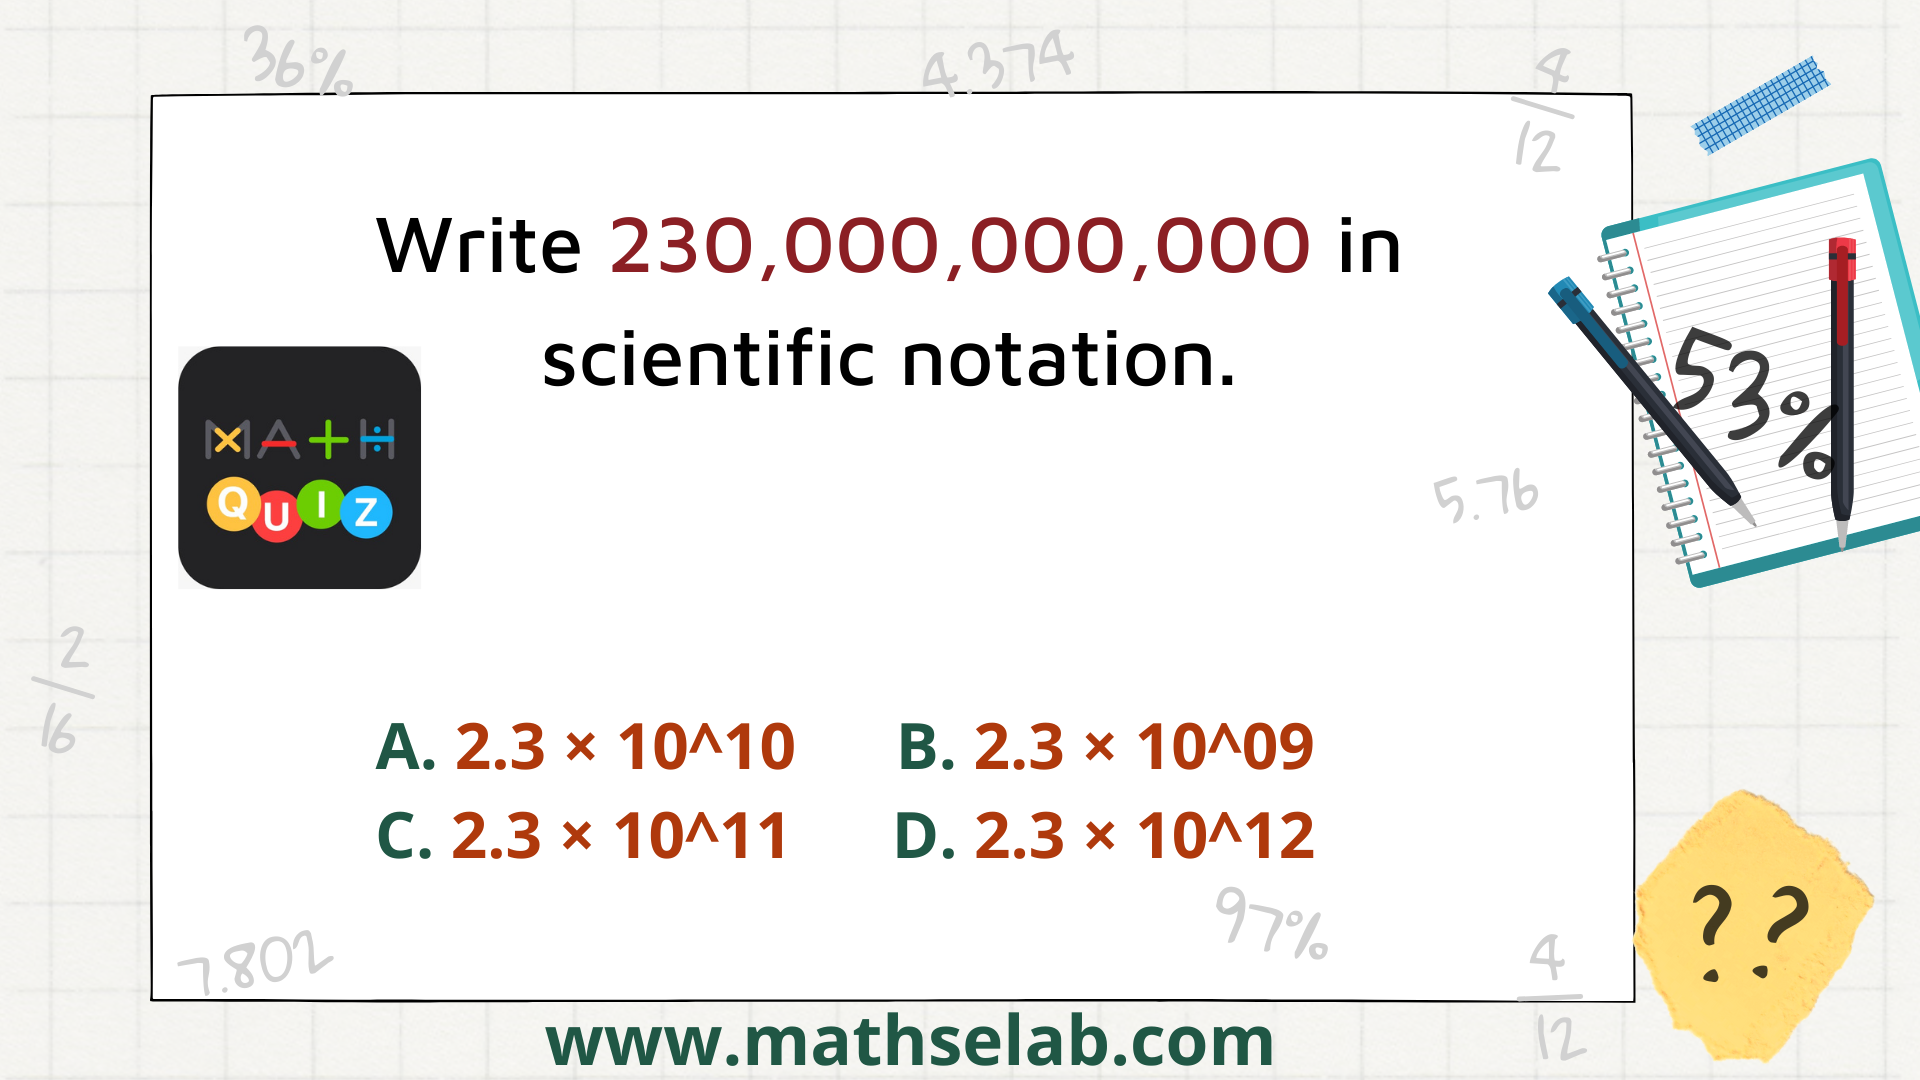 Write 230,000,000,000 in scientific notation.